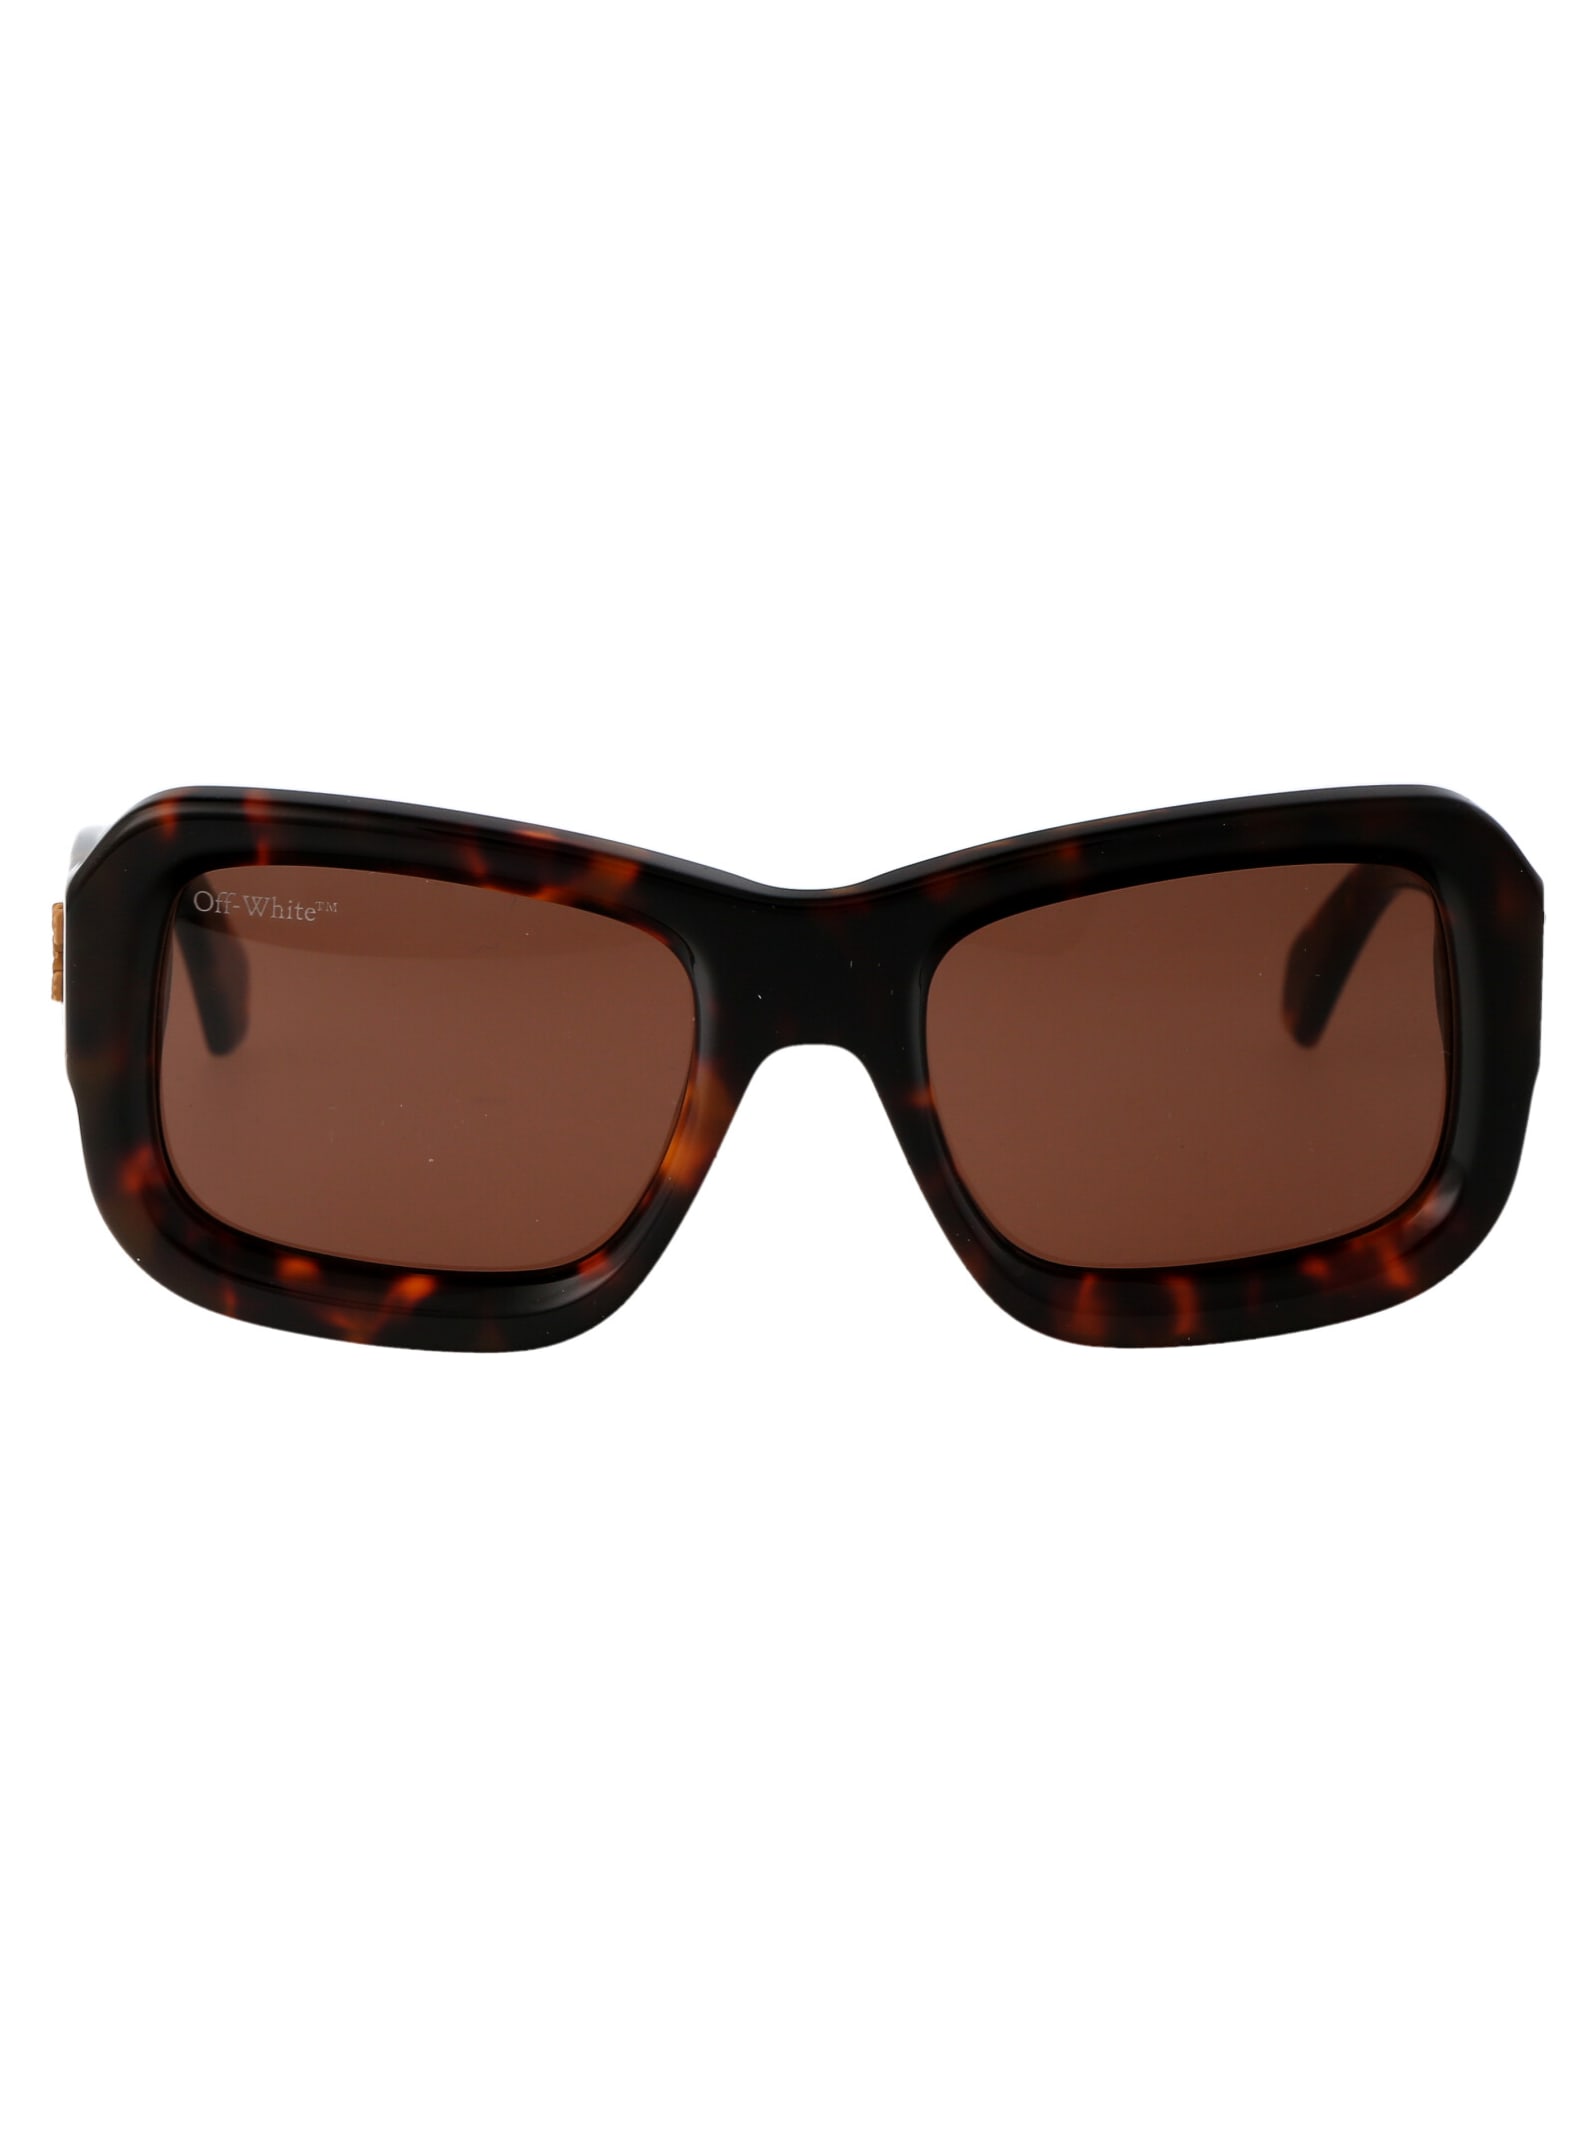 Off-White Verona Sunglasses